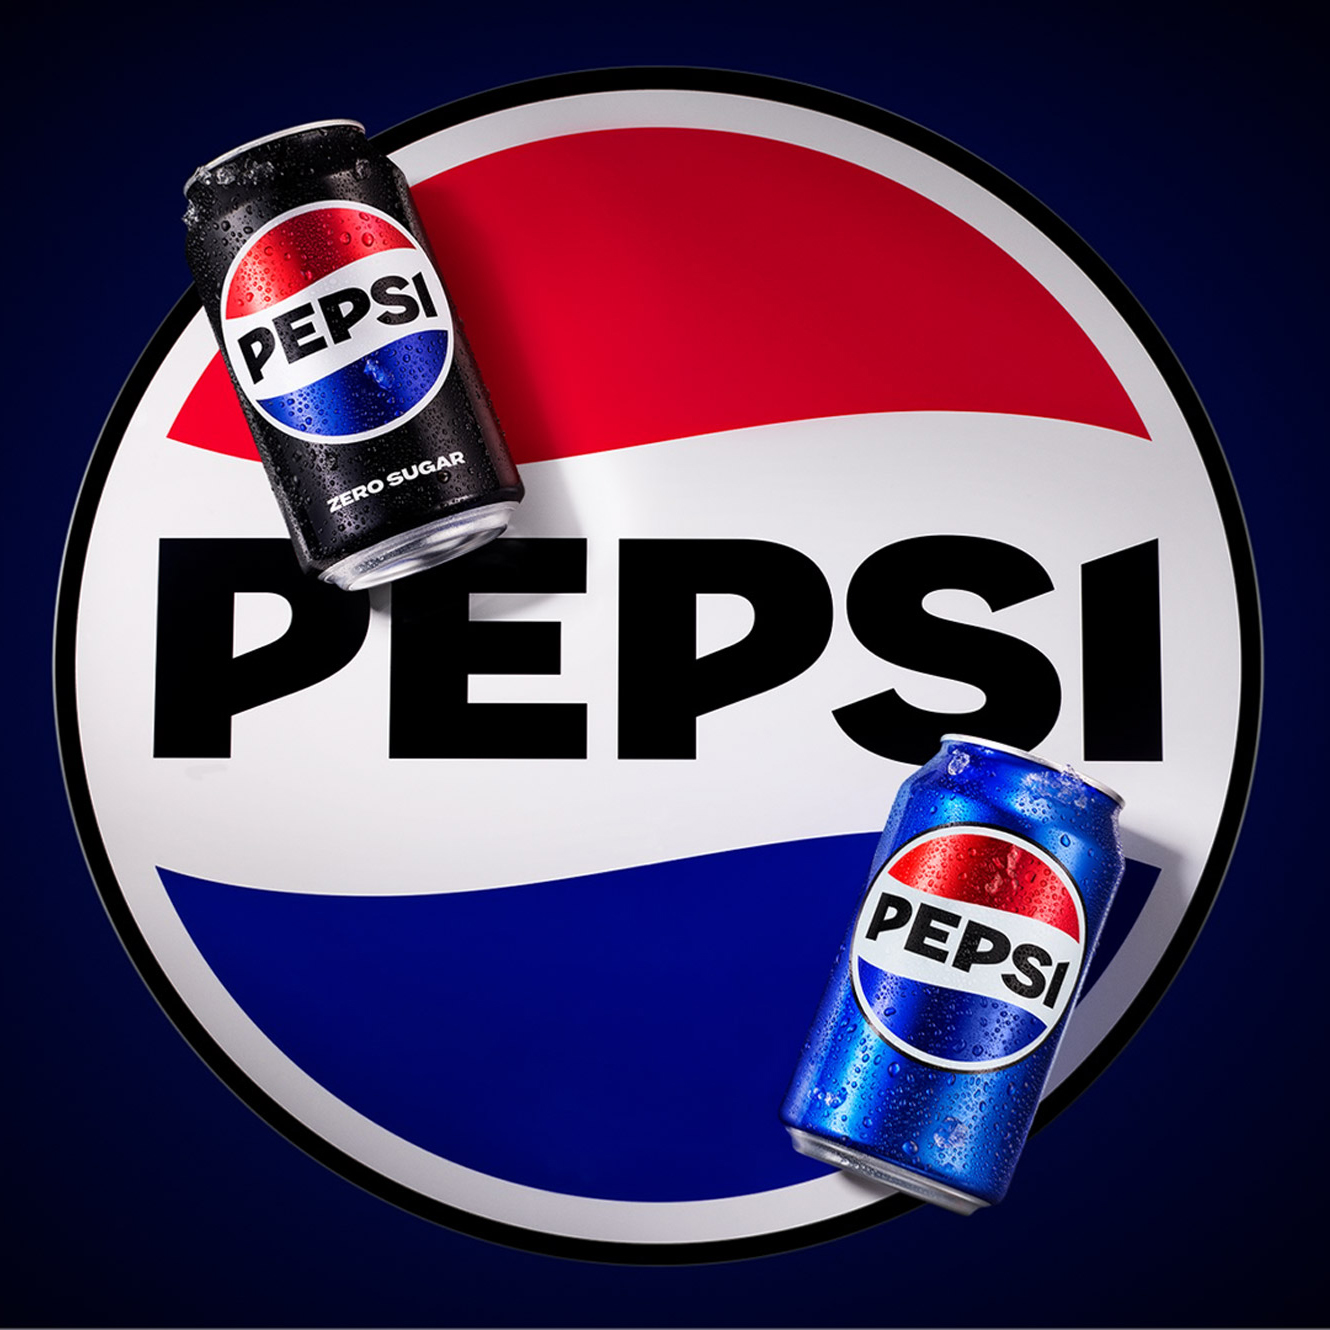 Pepsi logo coaster by jakubhroch - MakerWorld